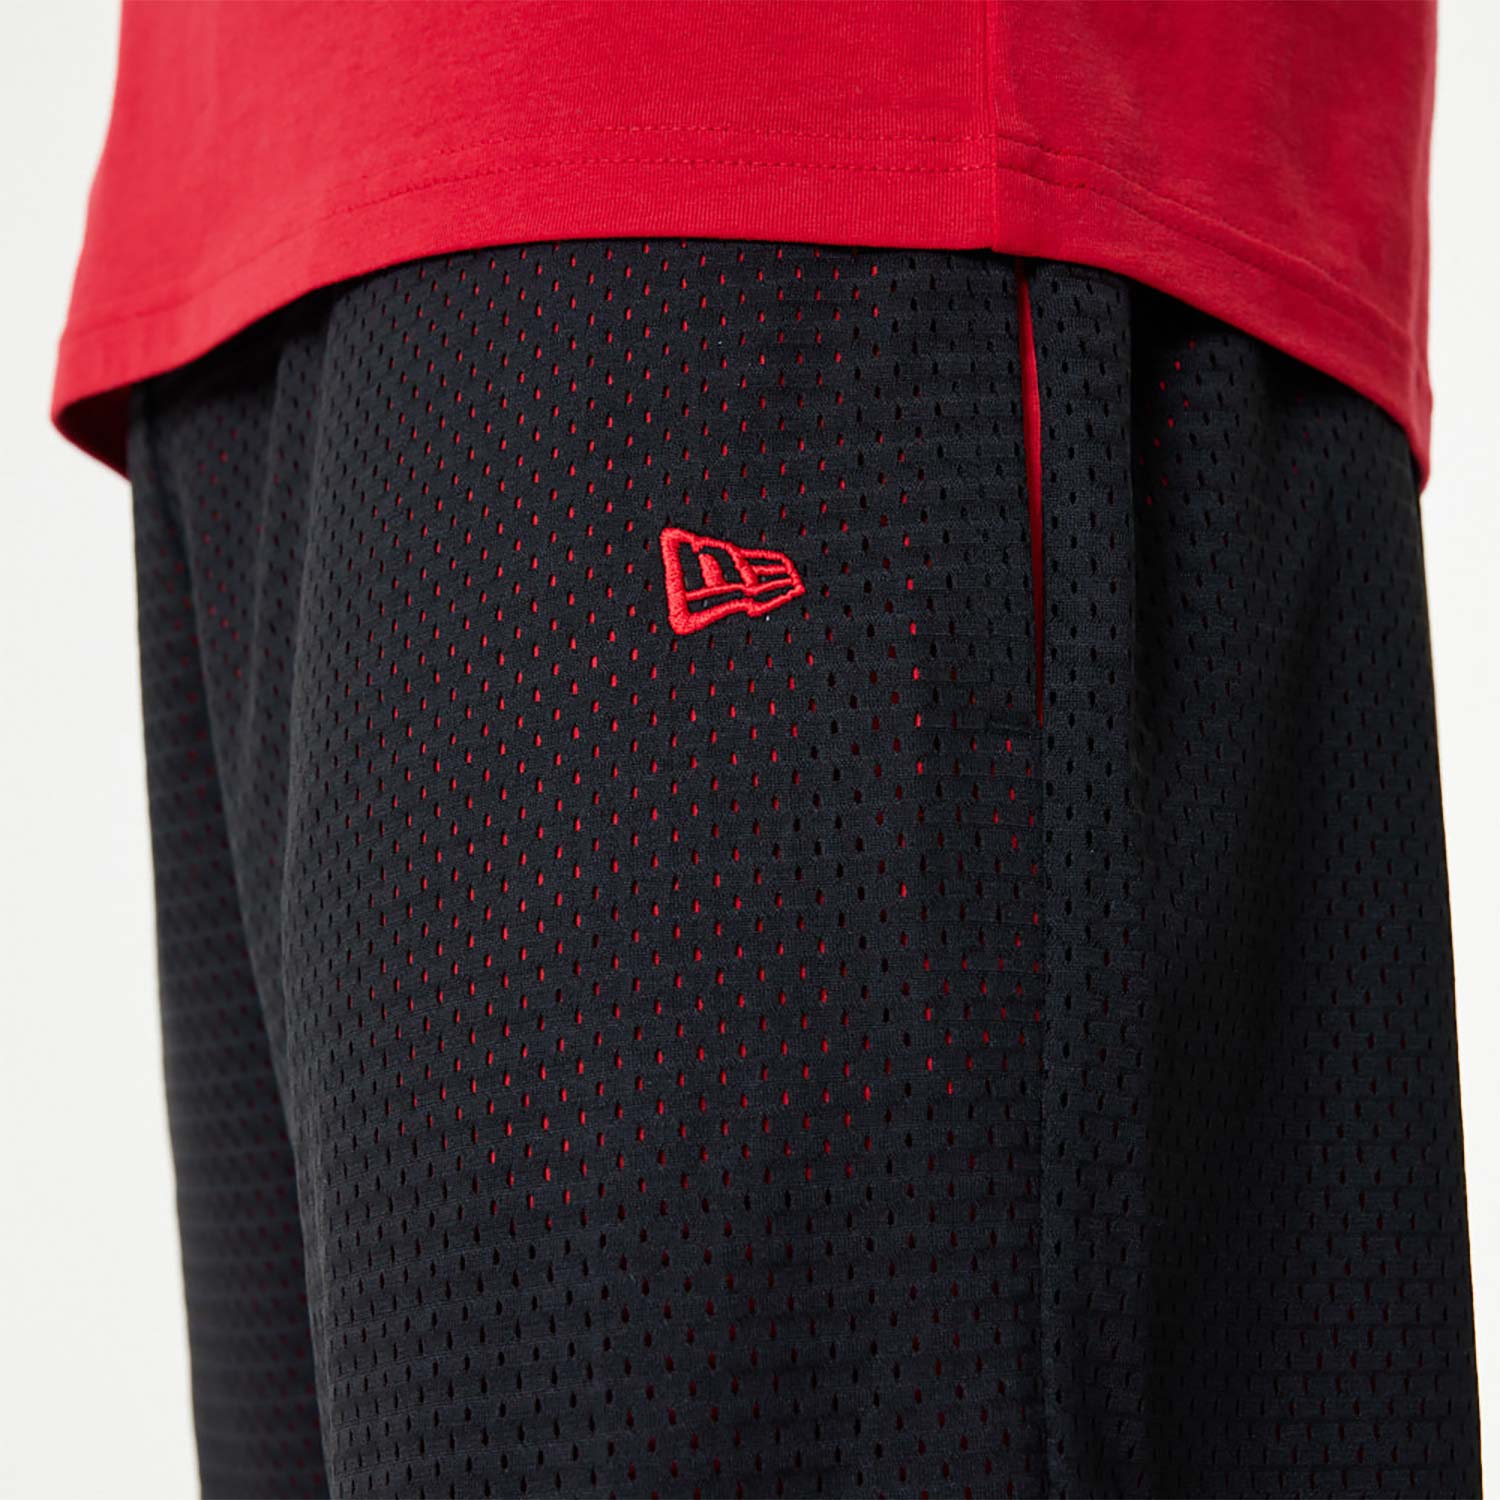 New Era Black And Red Mesh Shorts